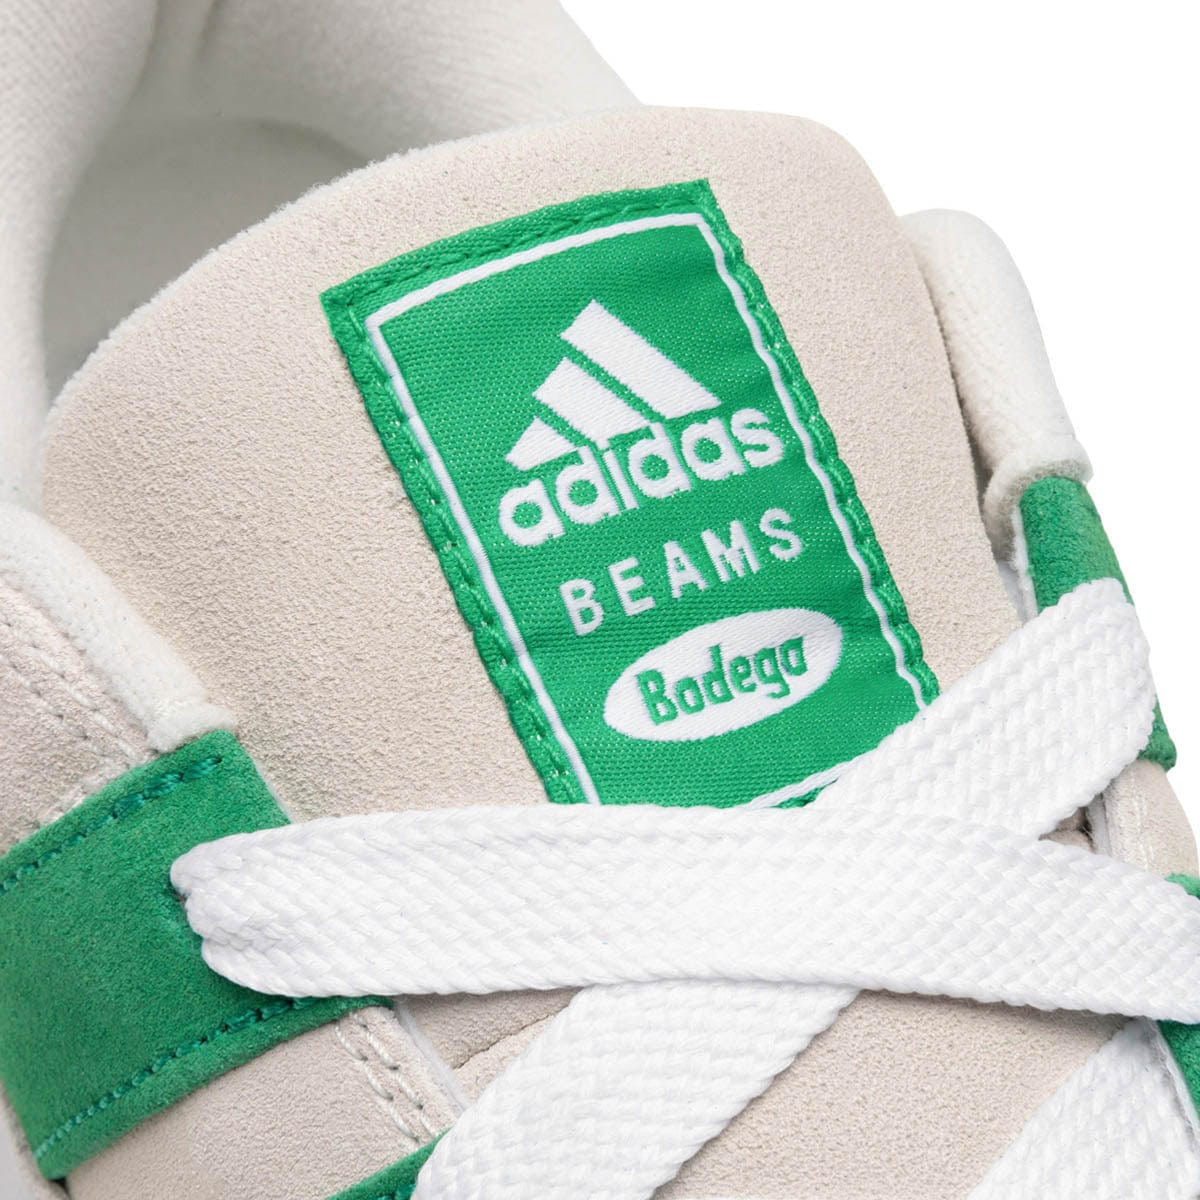 数量限定限定SALE【新品】Bodega × BEAMS × adidas Adimatic 靴